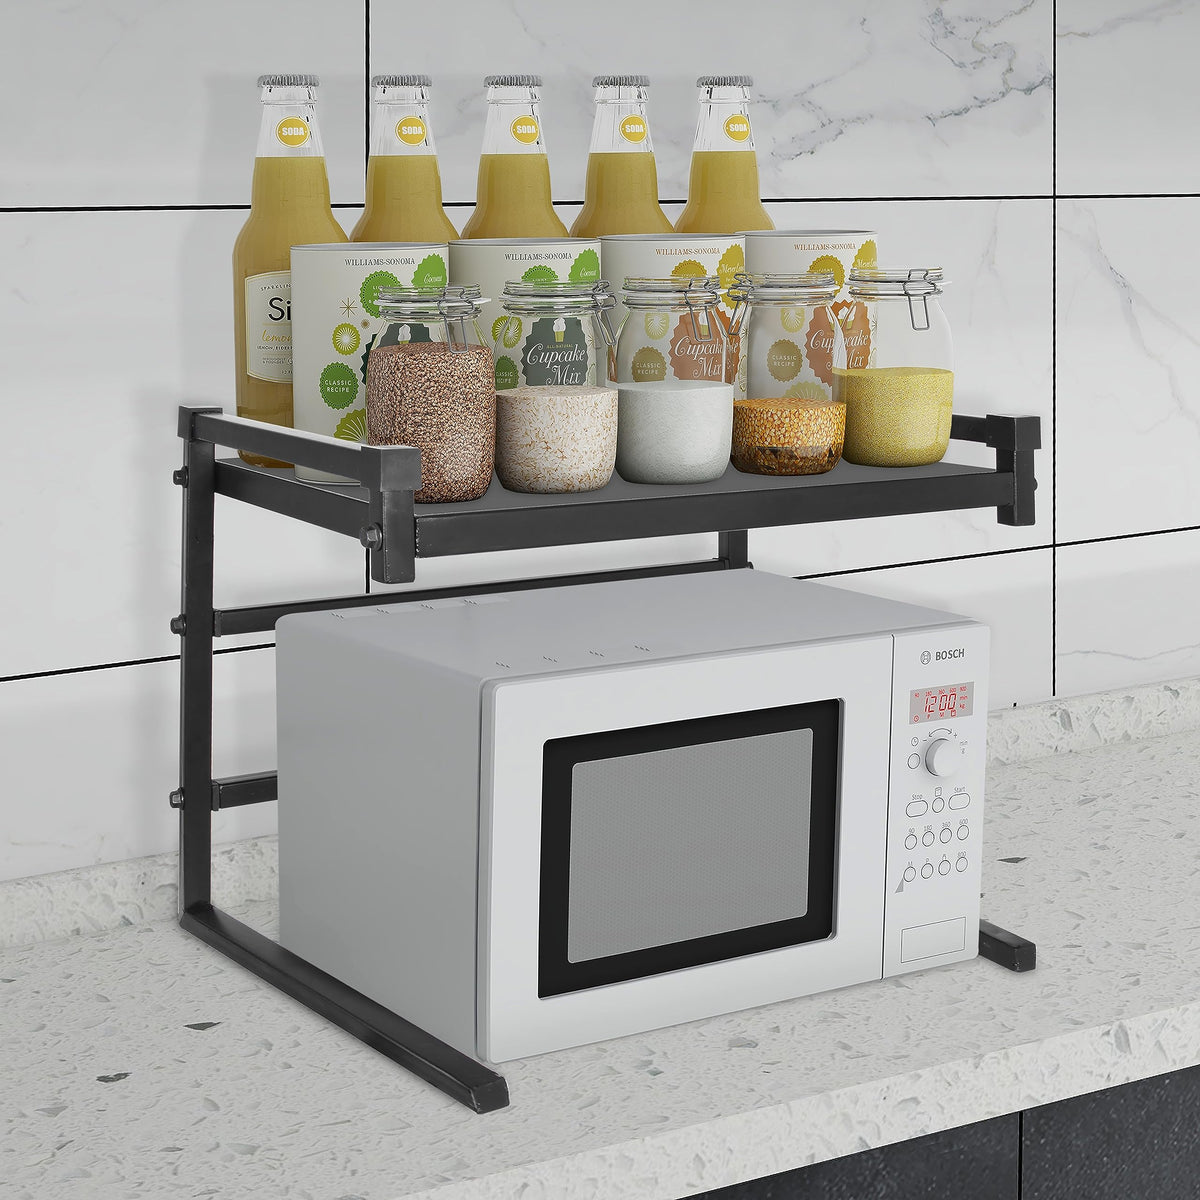 Plantex Space Saver Kitchen Organizer Stand for Convection Microwave OTG Oven – Kitchen Accessories (Black)